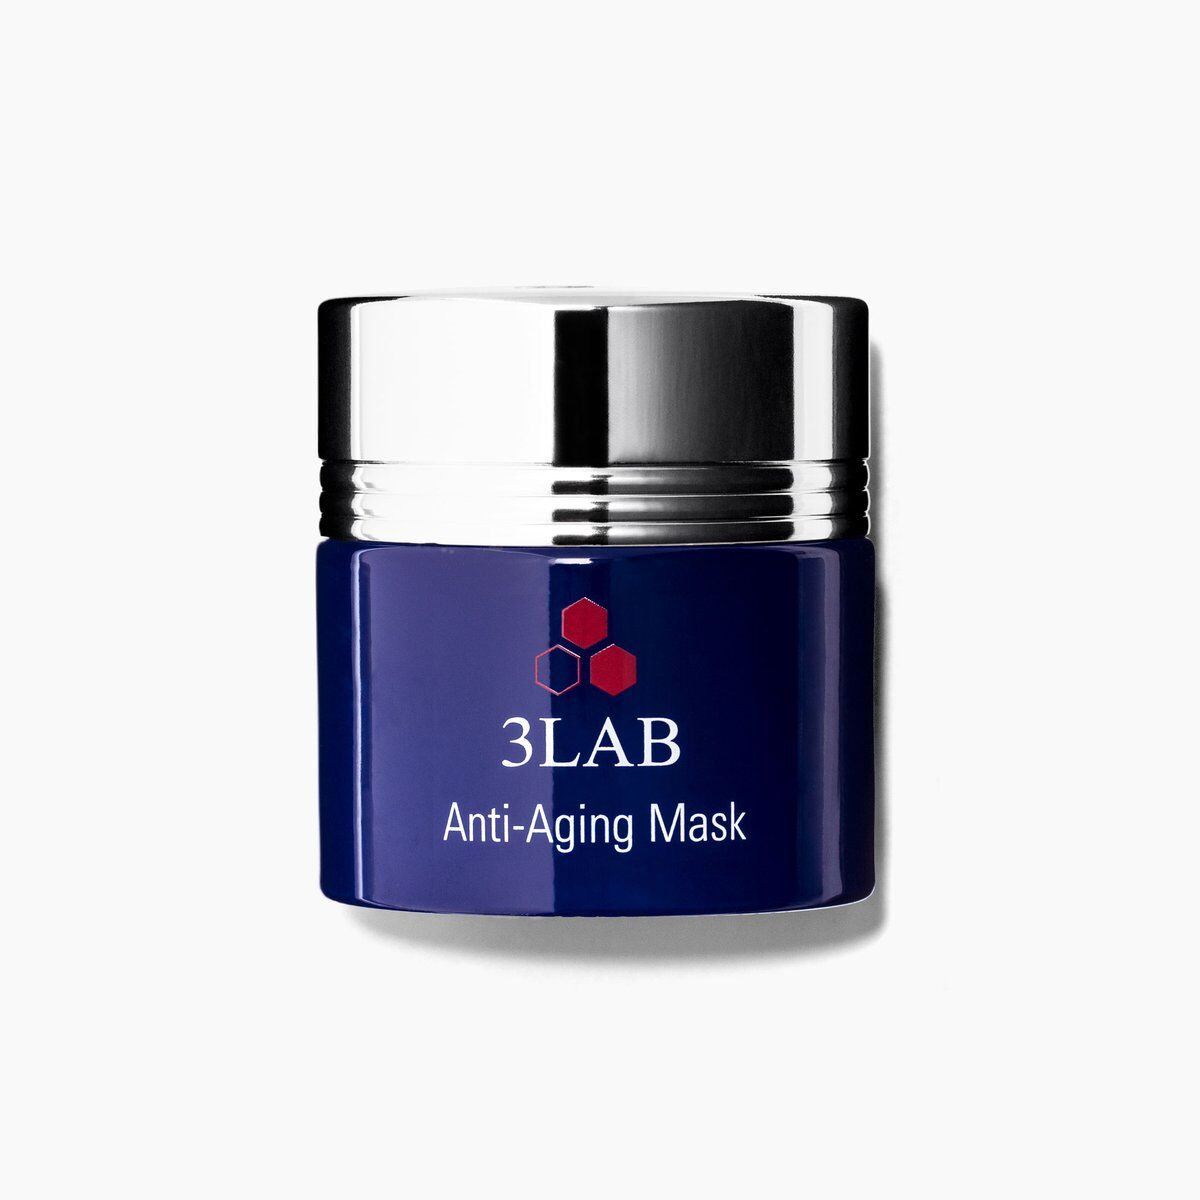 3LAB - Anti-Aging Mask